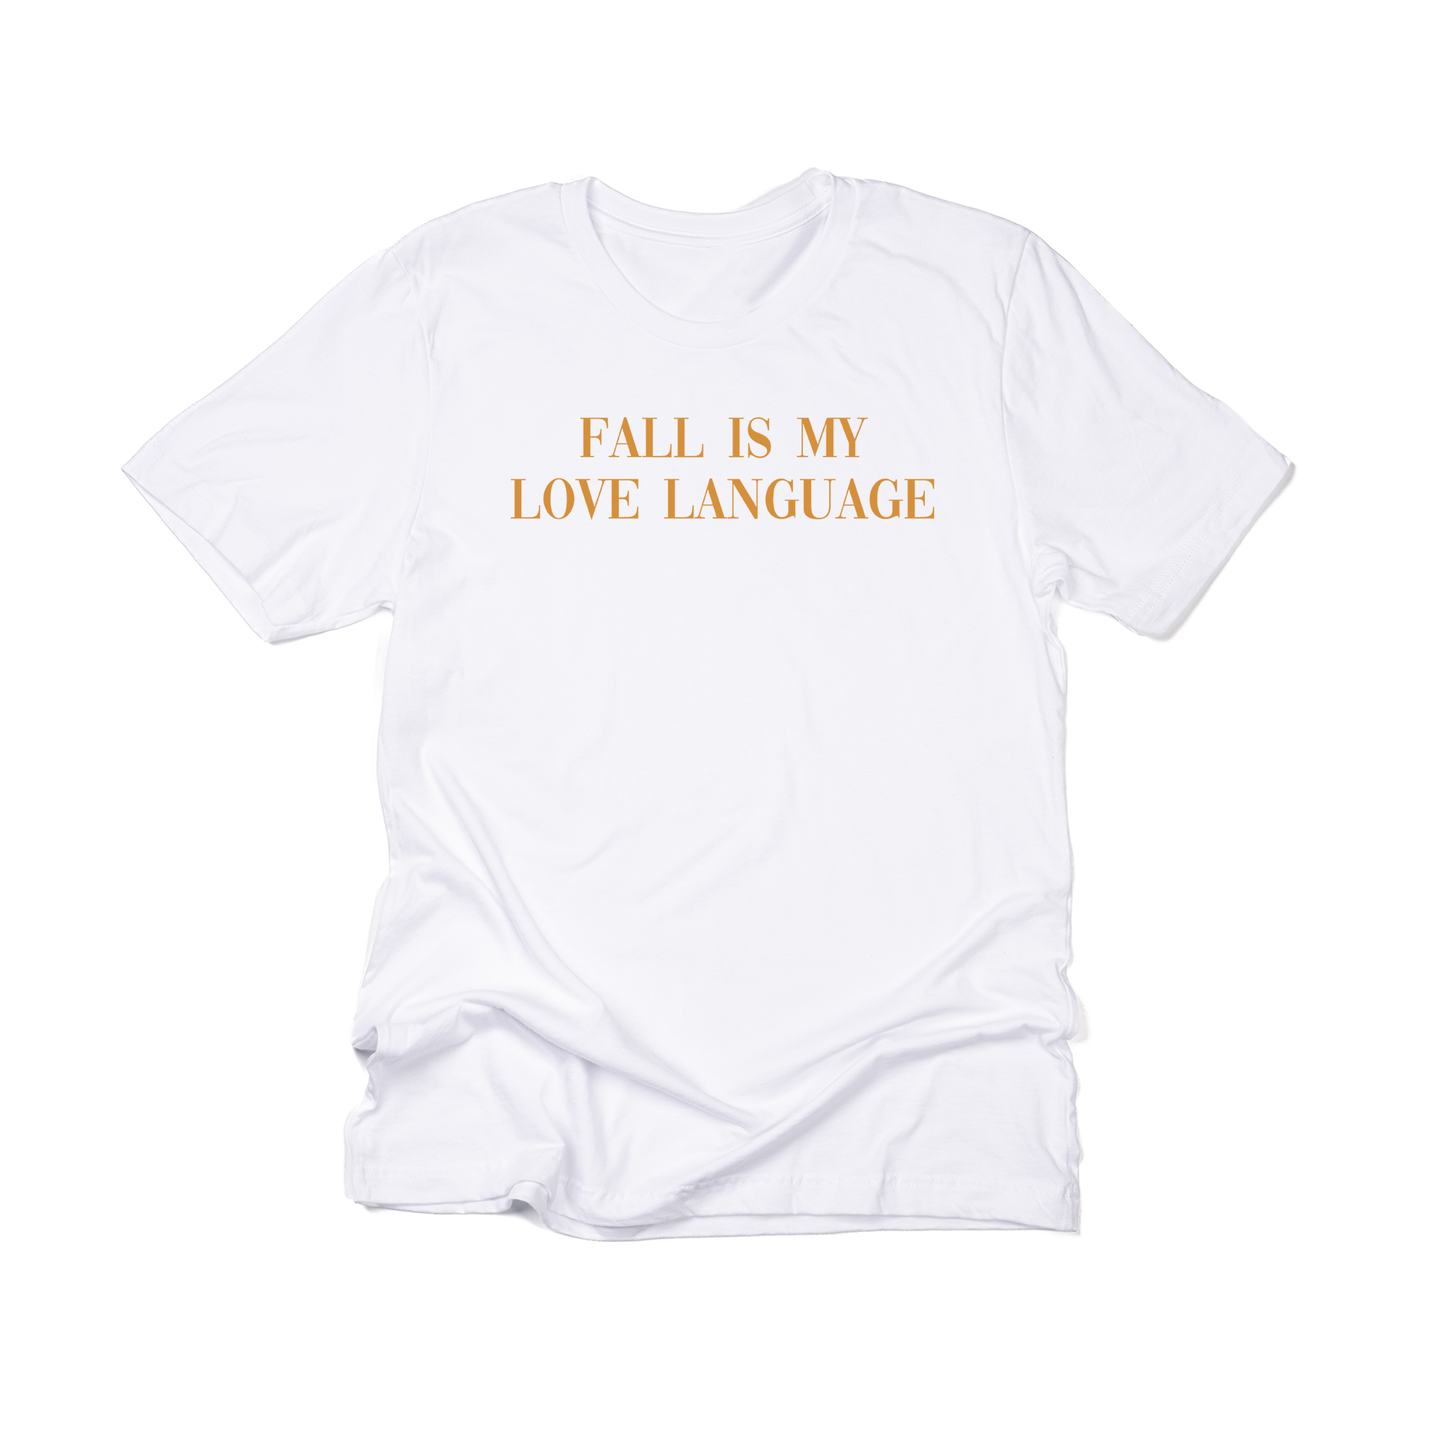 Fall is my love language (Mustard) - Tee (White)